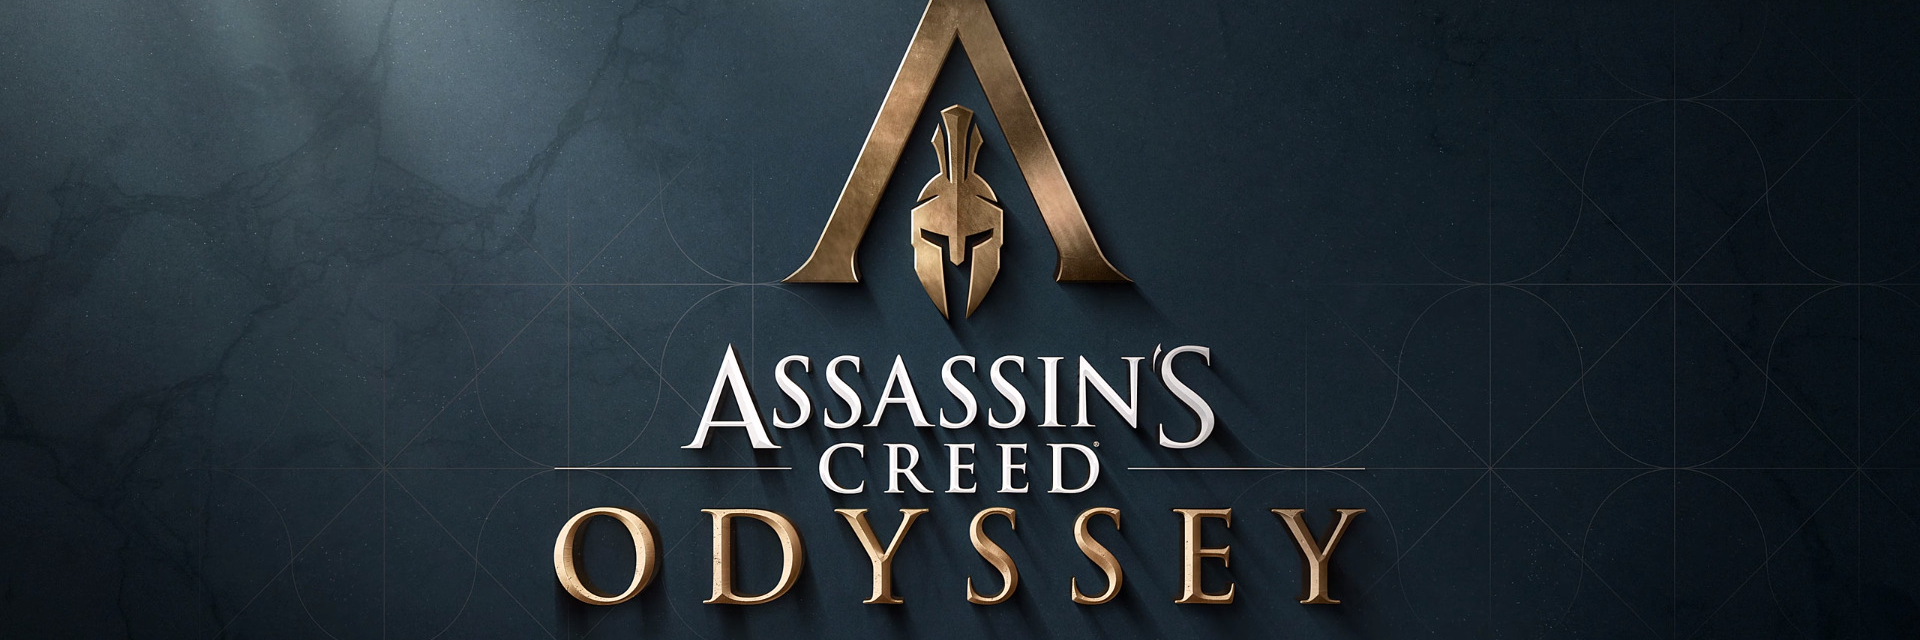 Assassin’s Creed Odyssey. Ключи для ассасин Крид 3 юплей. Assassin's Creed Odyssey обои на рабочий стол 1920х1080.